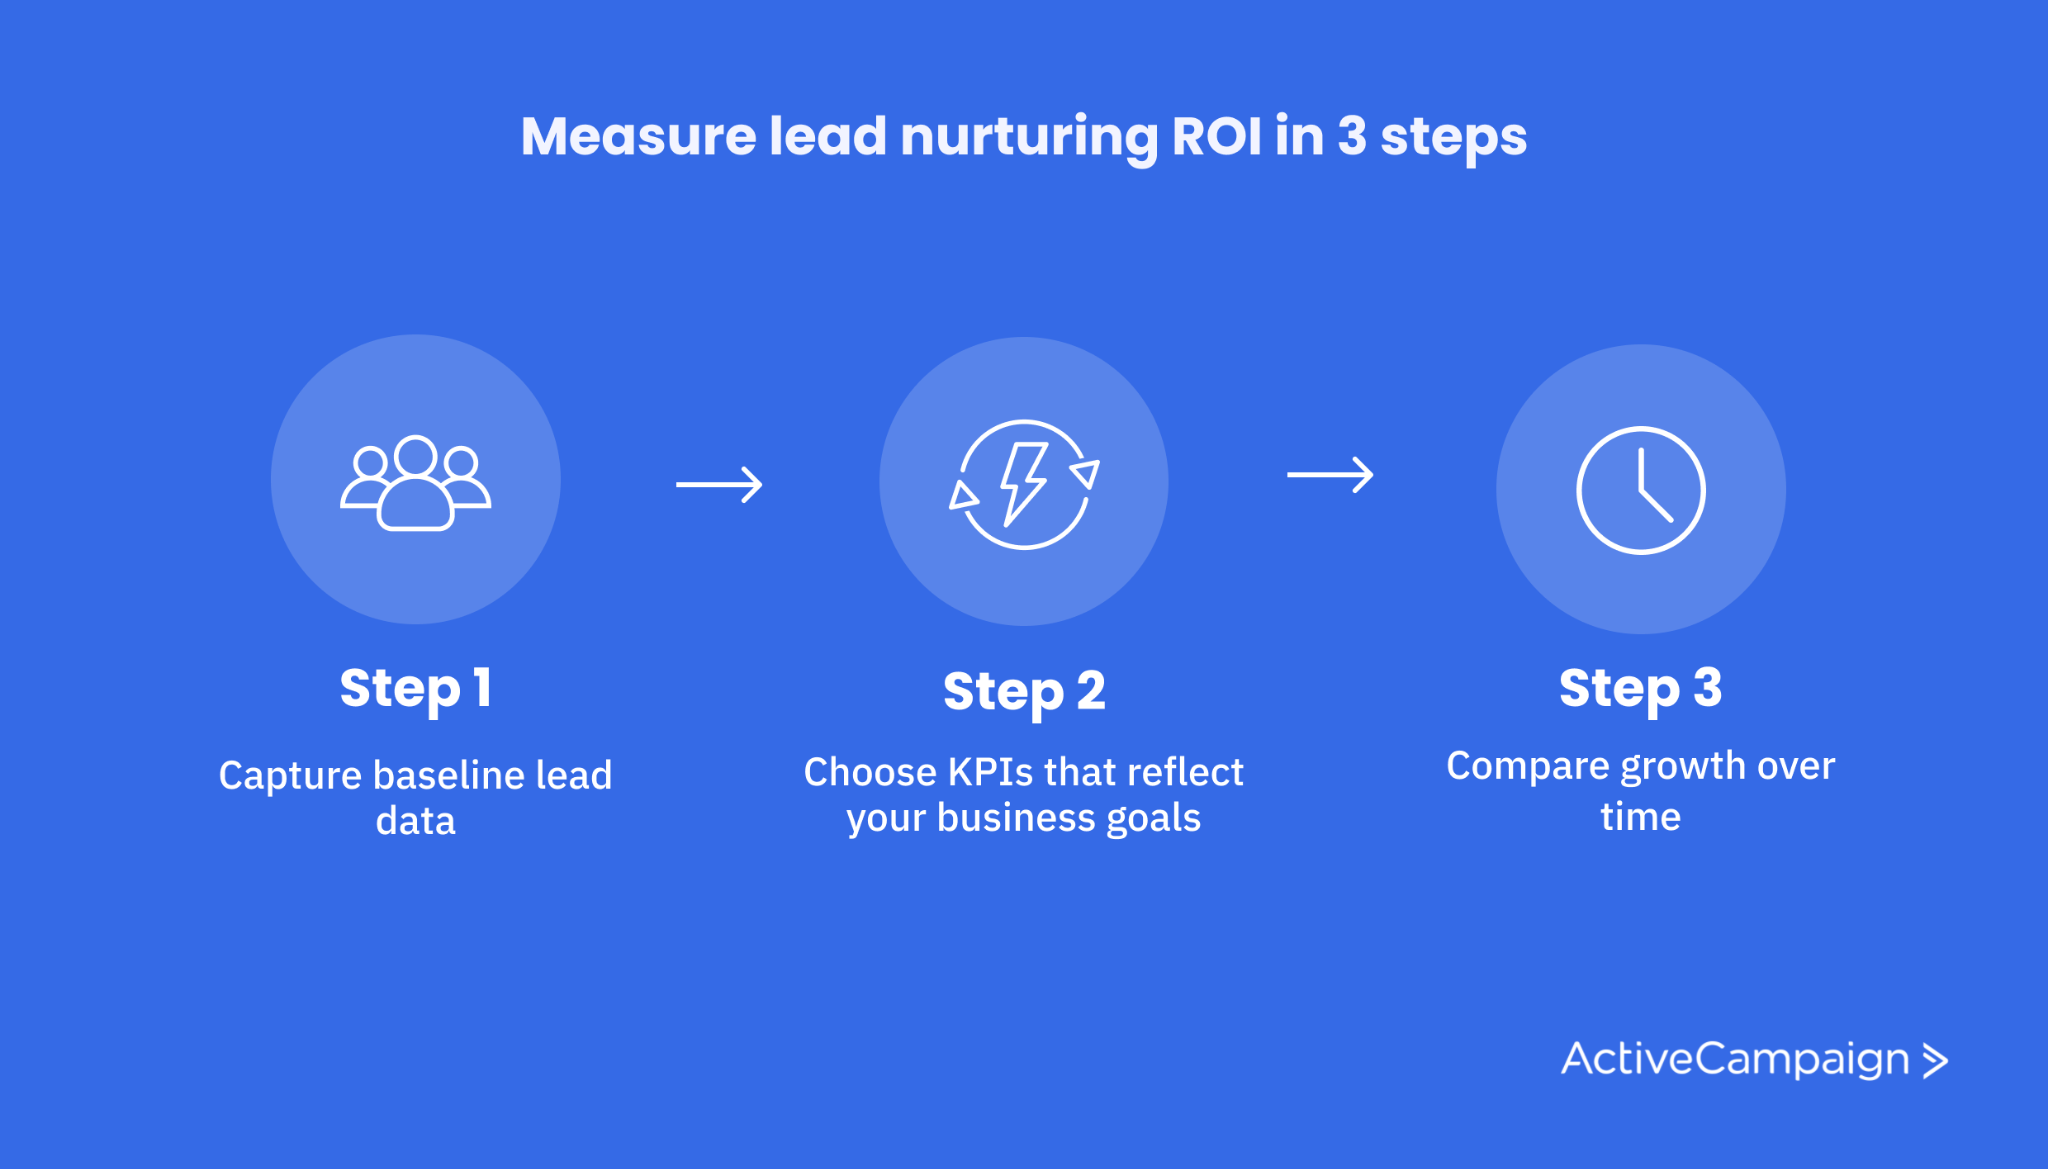 How to measure lead nurturing ROI in 3 steps